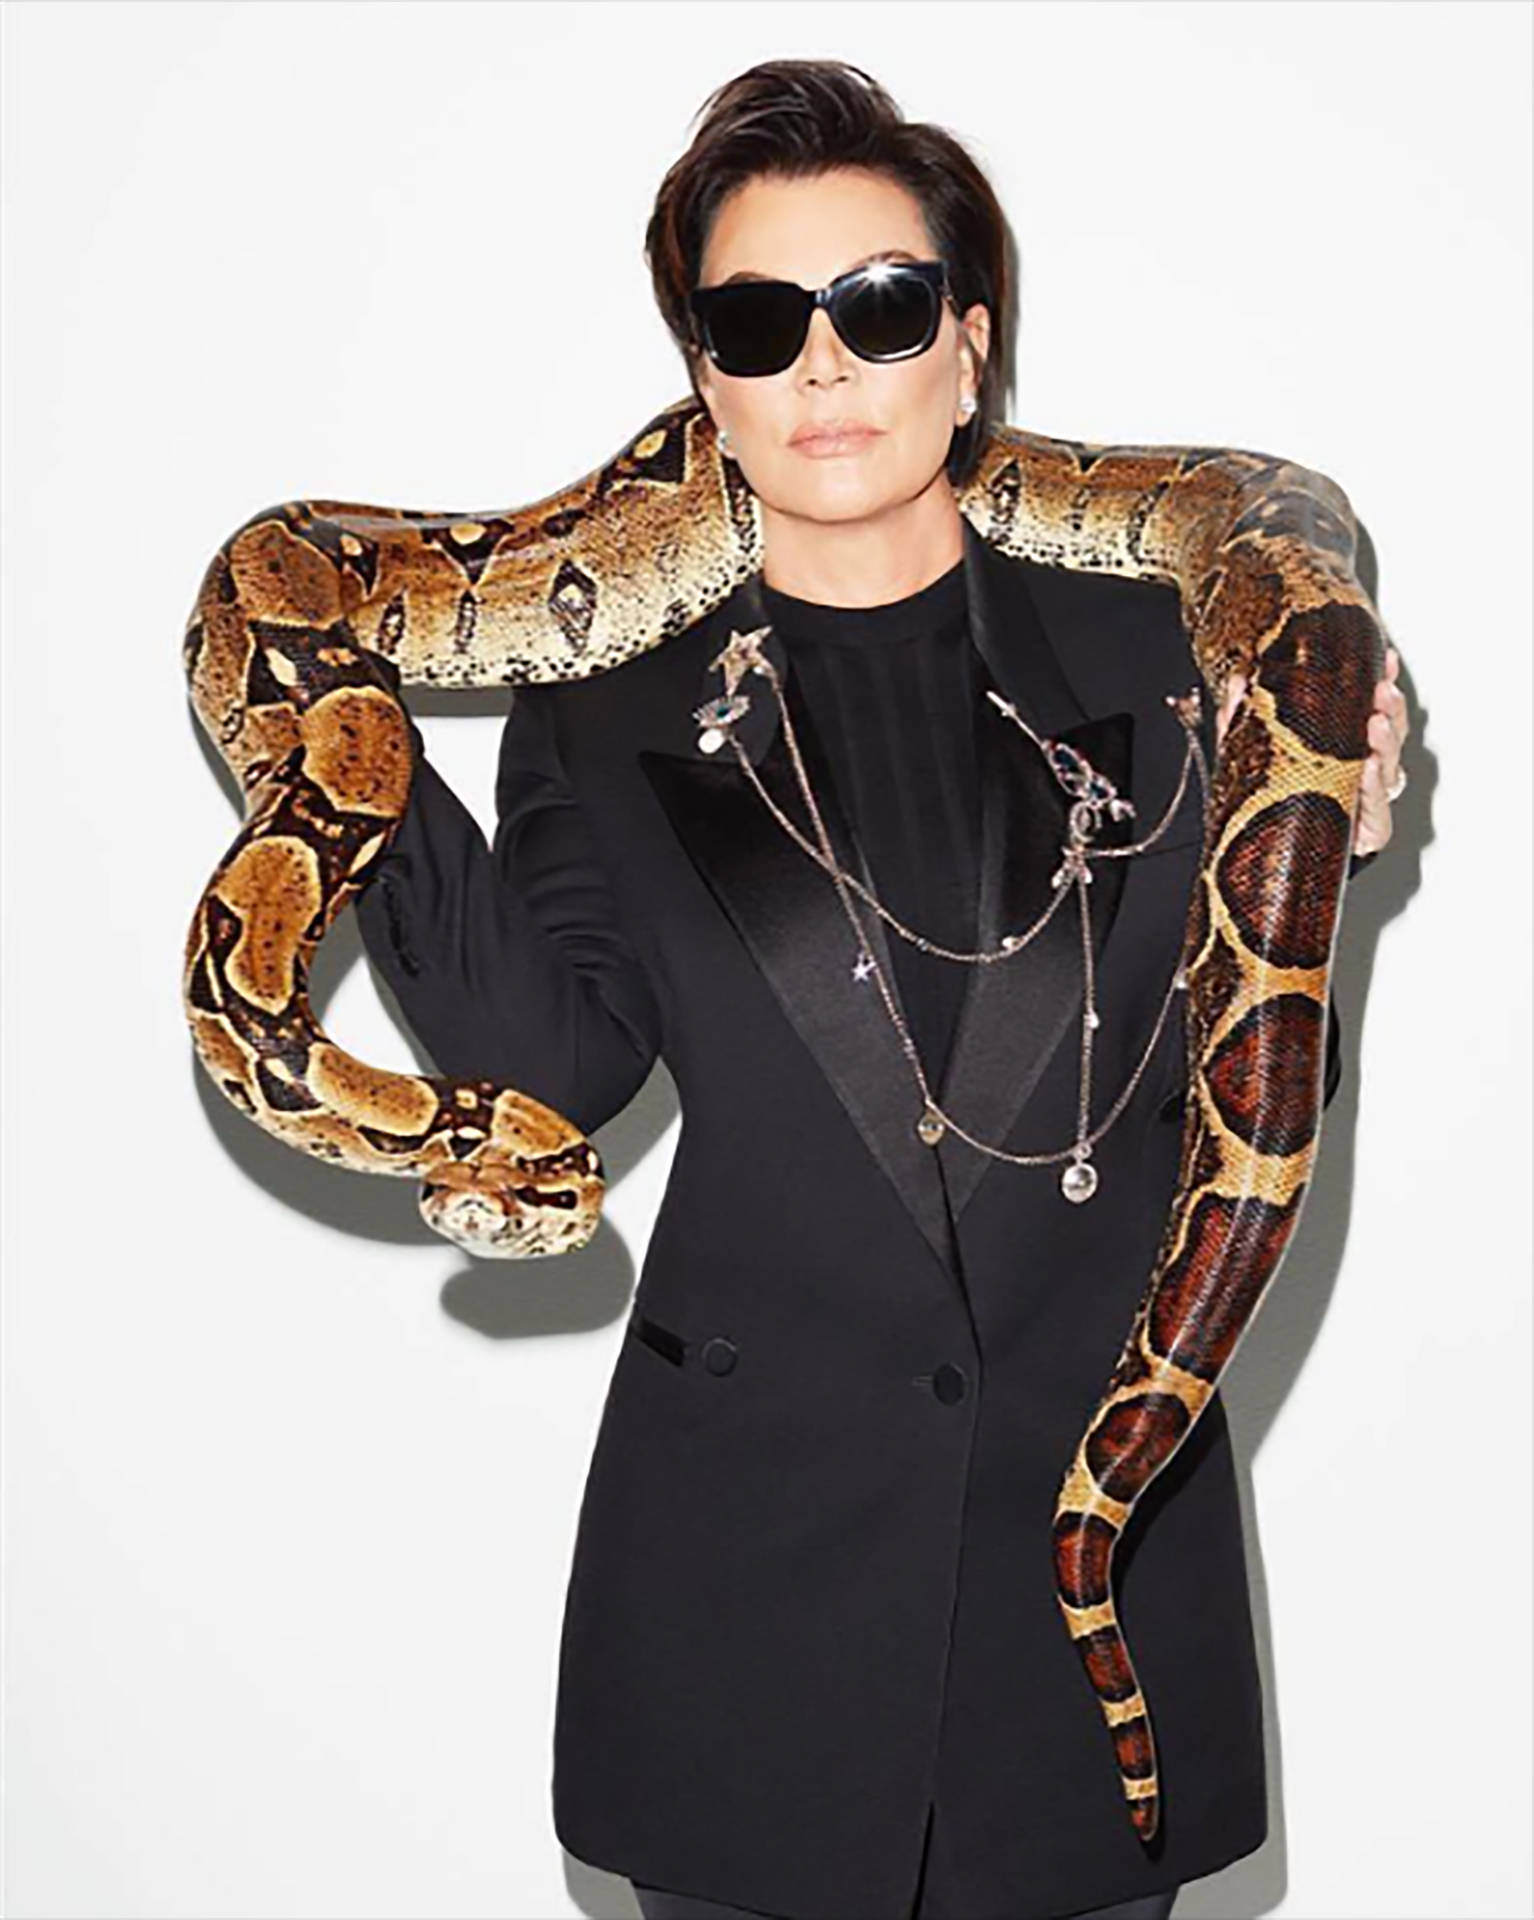 Kris Jenner With Snake